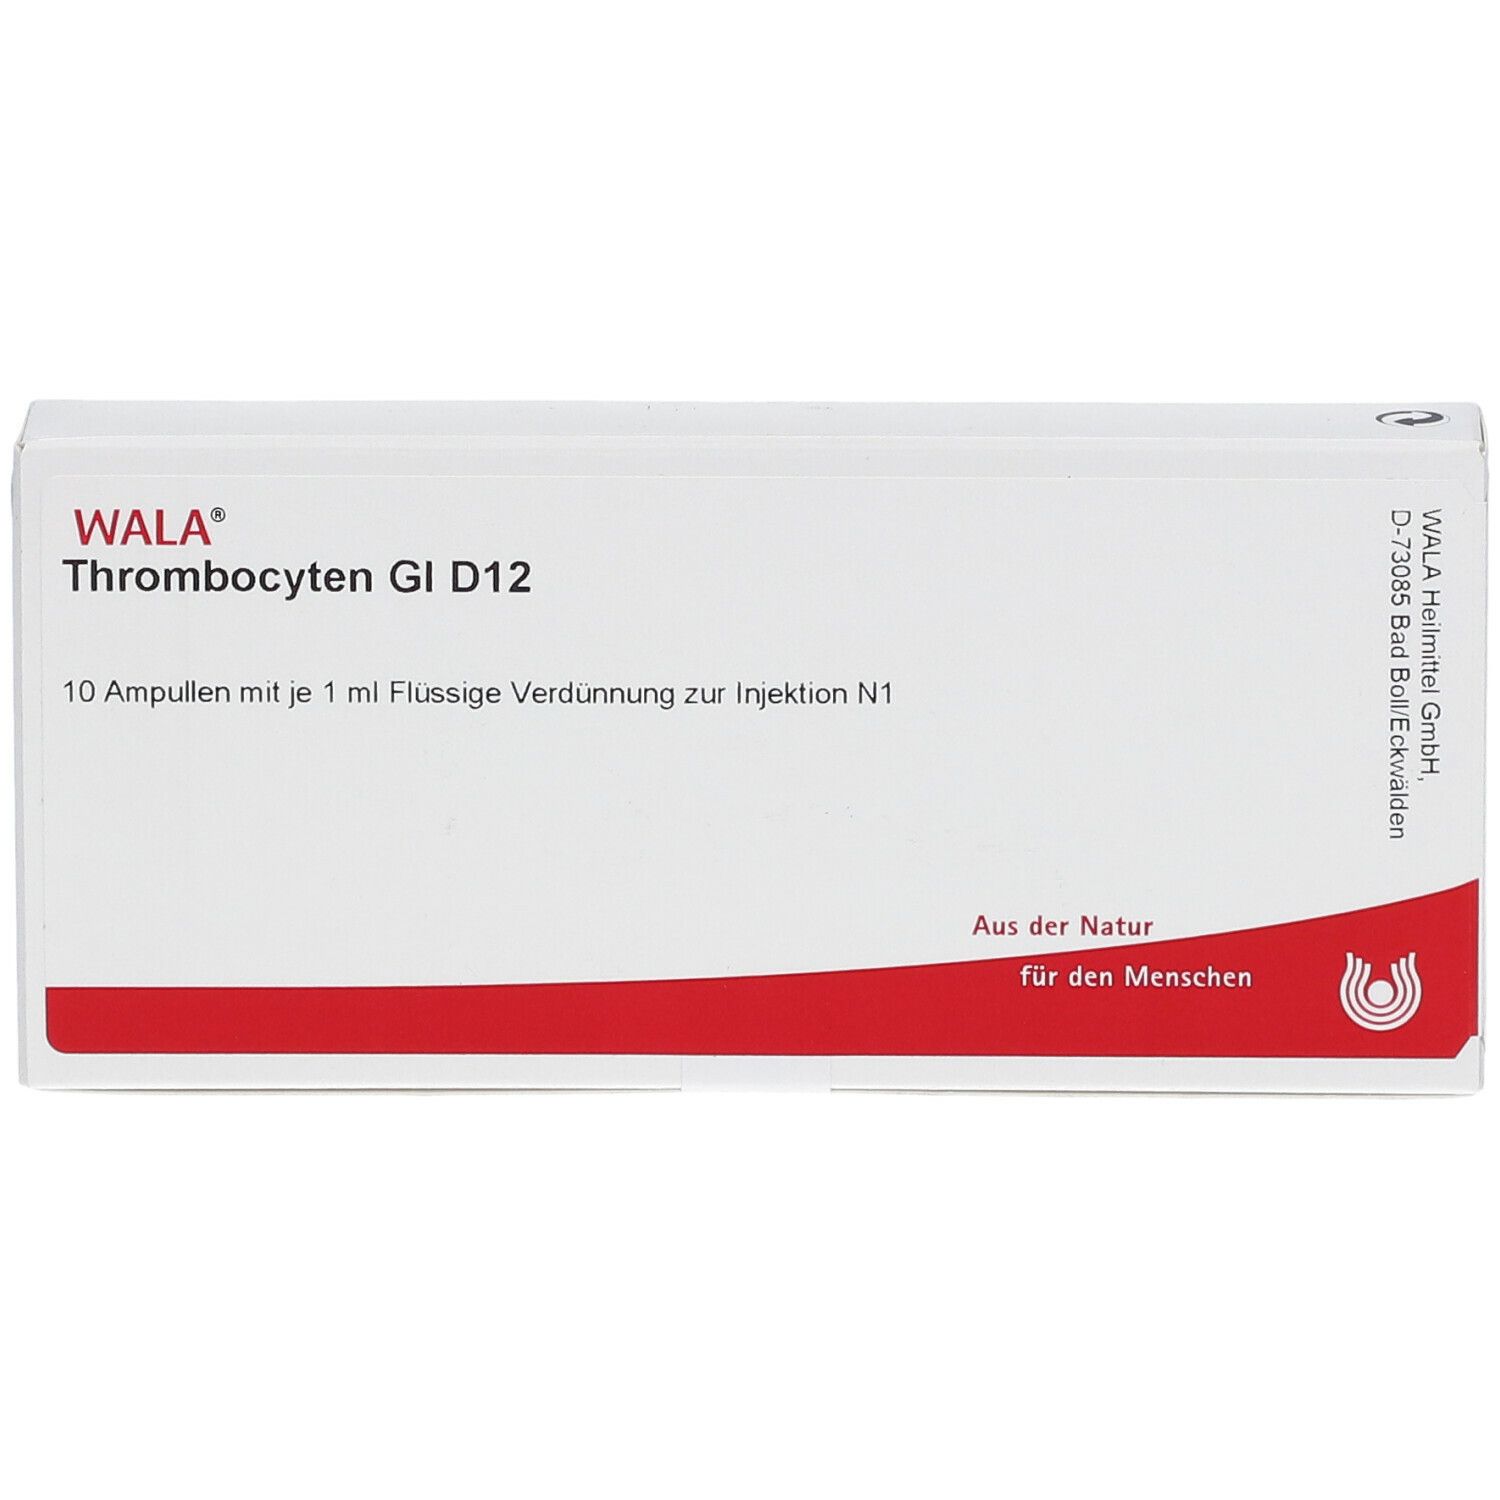 WALA® Thrombocyten Gl D 12